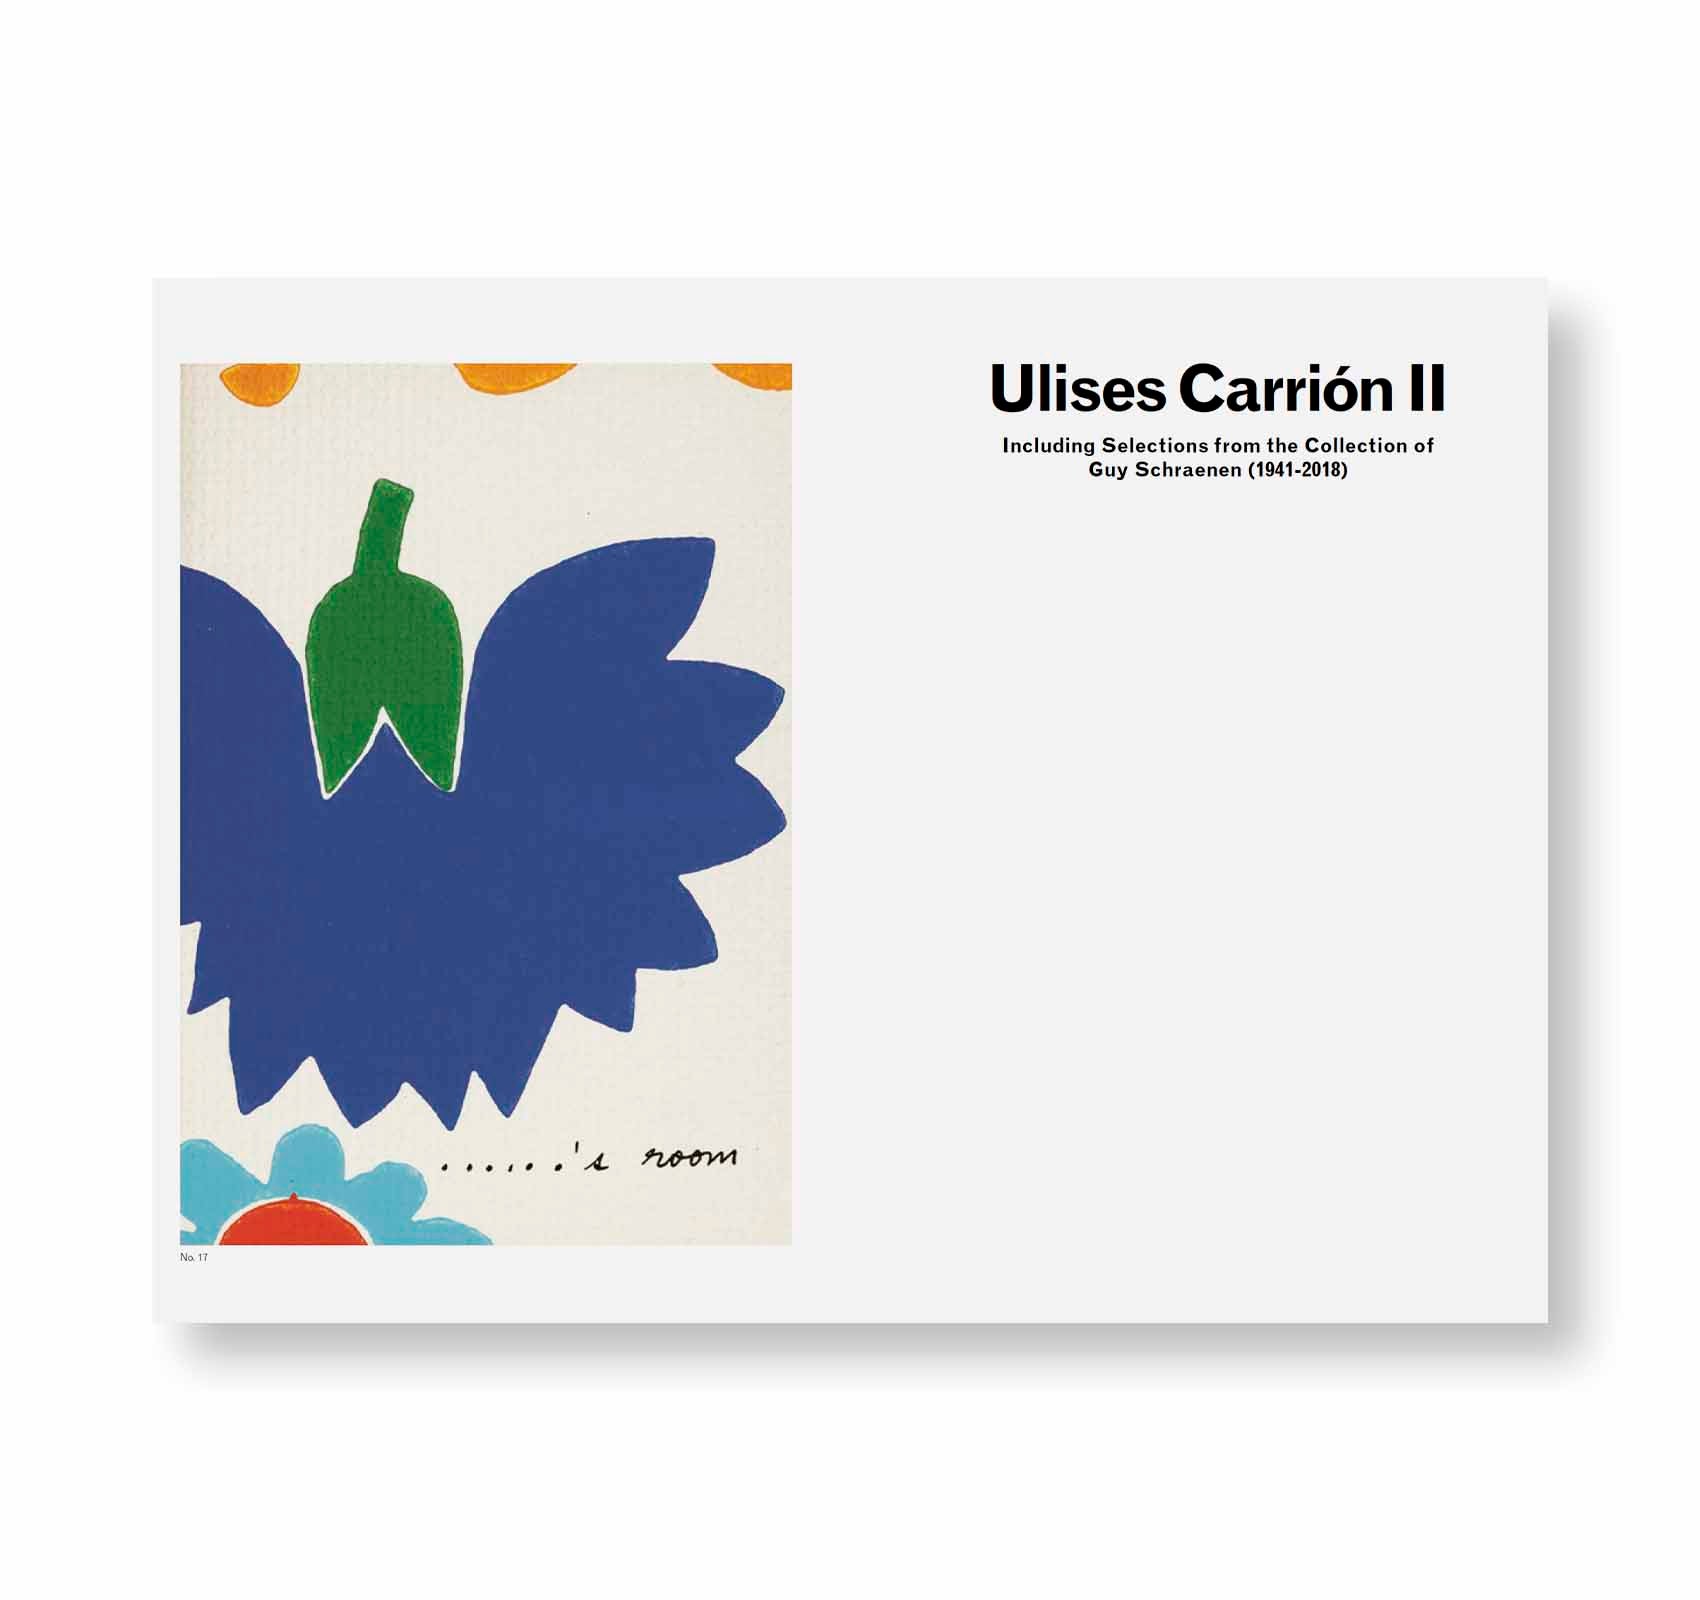 ULISES CARRIÓN Ⅱ - CATALOGUE 245 by Ulises Carrión